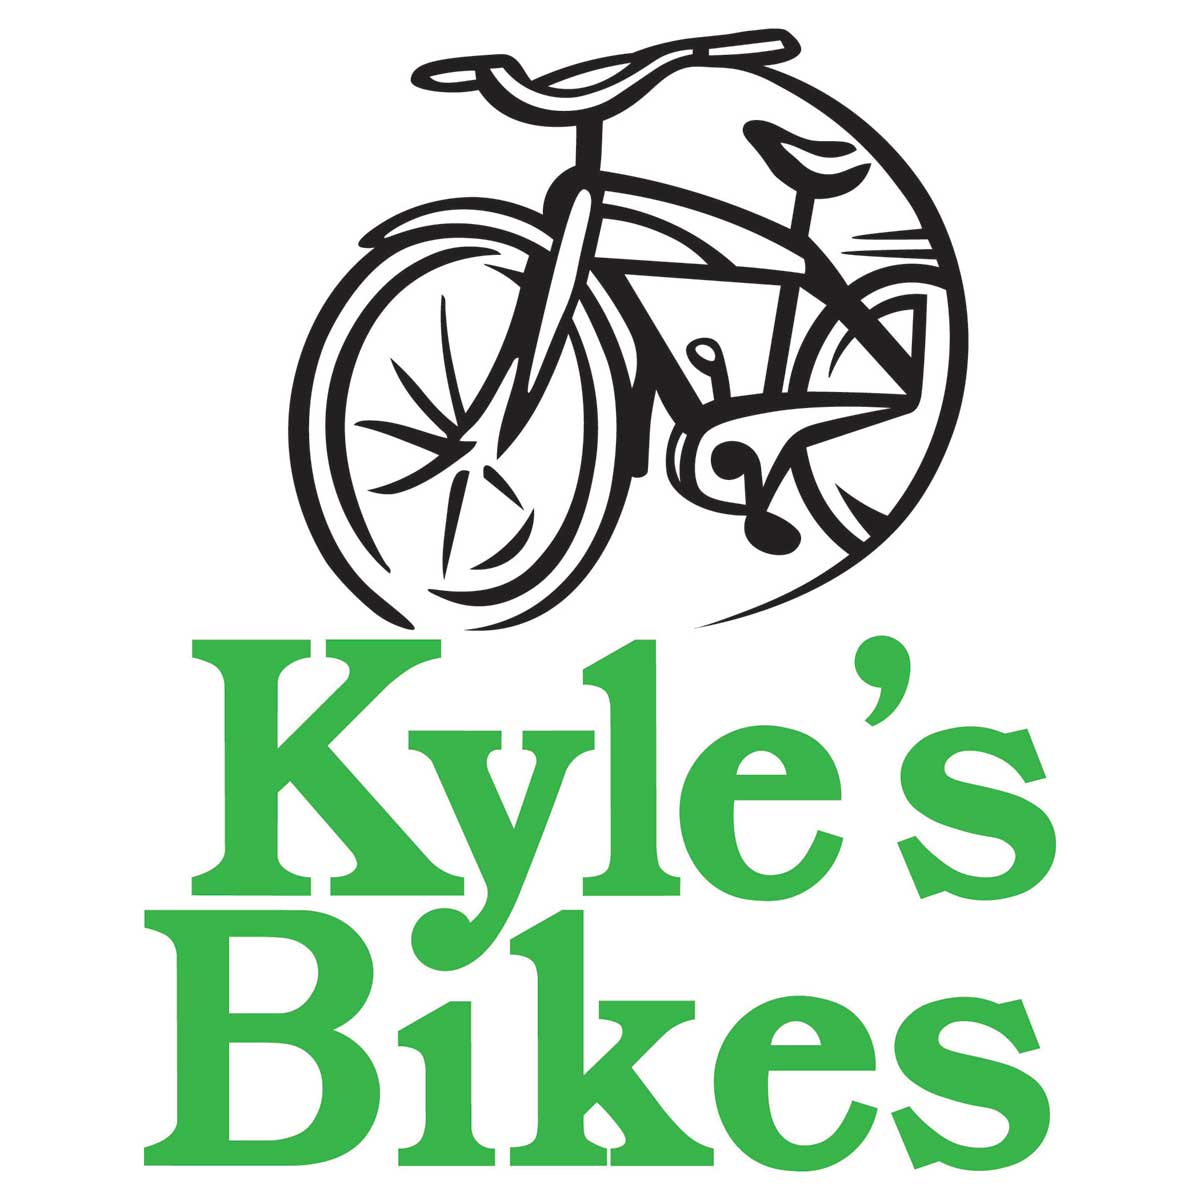 Kyle's Bikes supports BIKEIOWA.com.